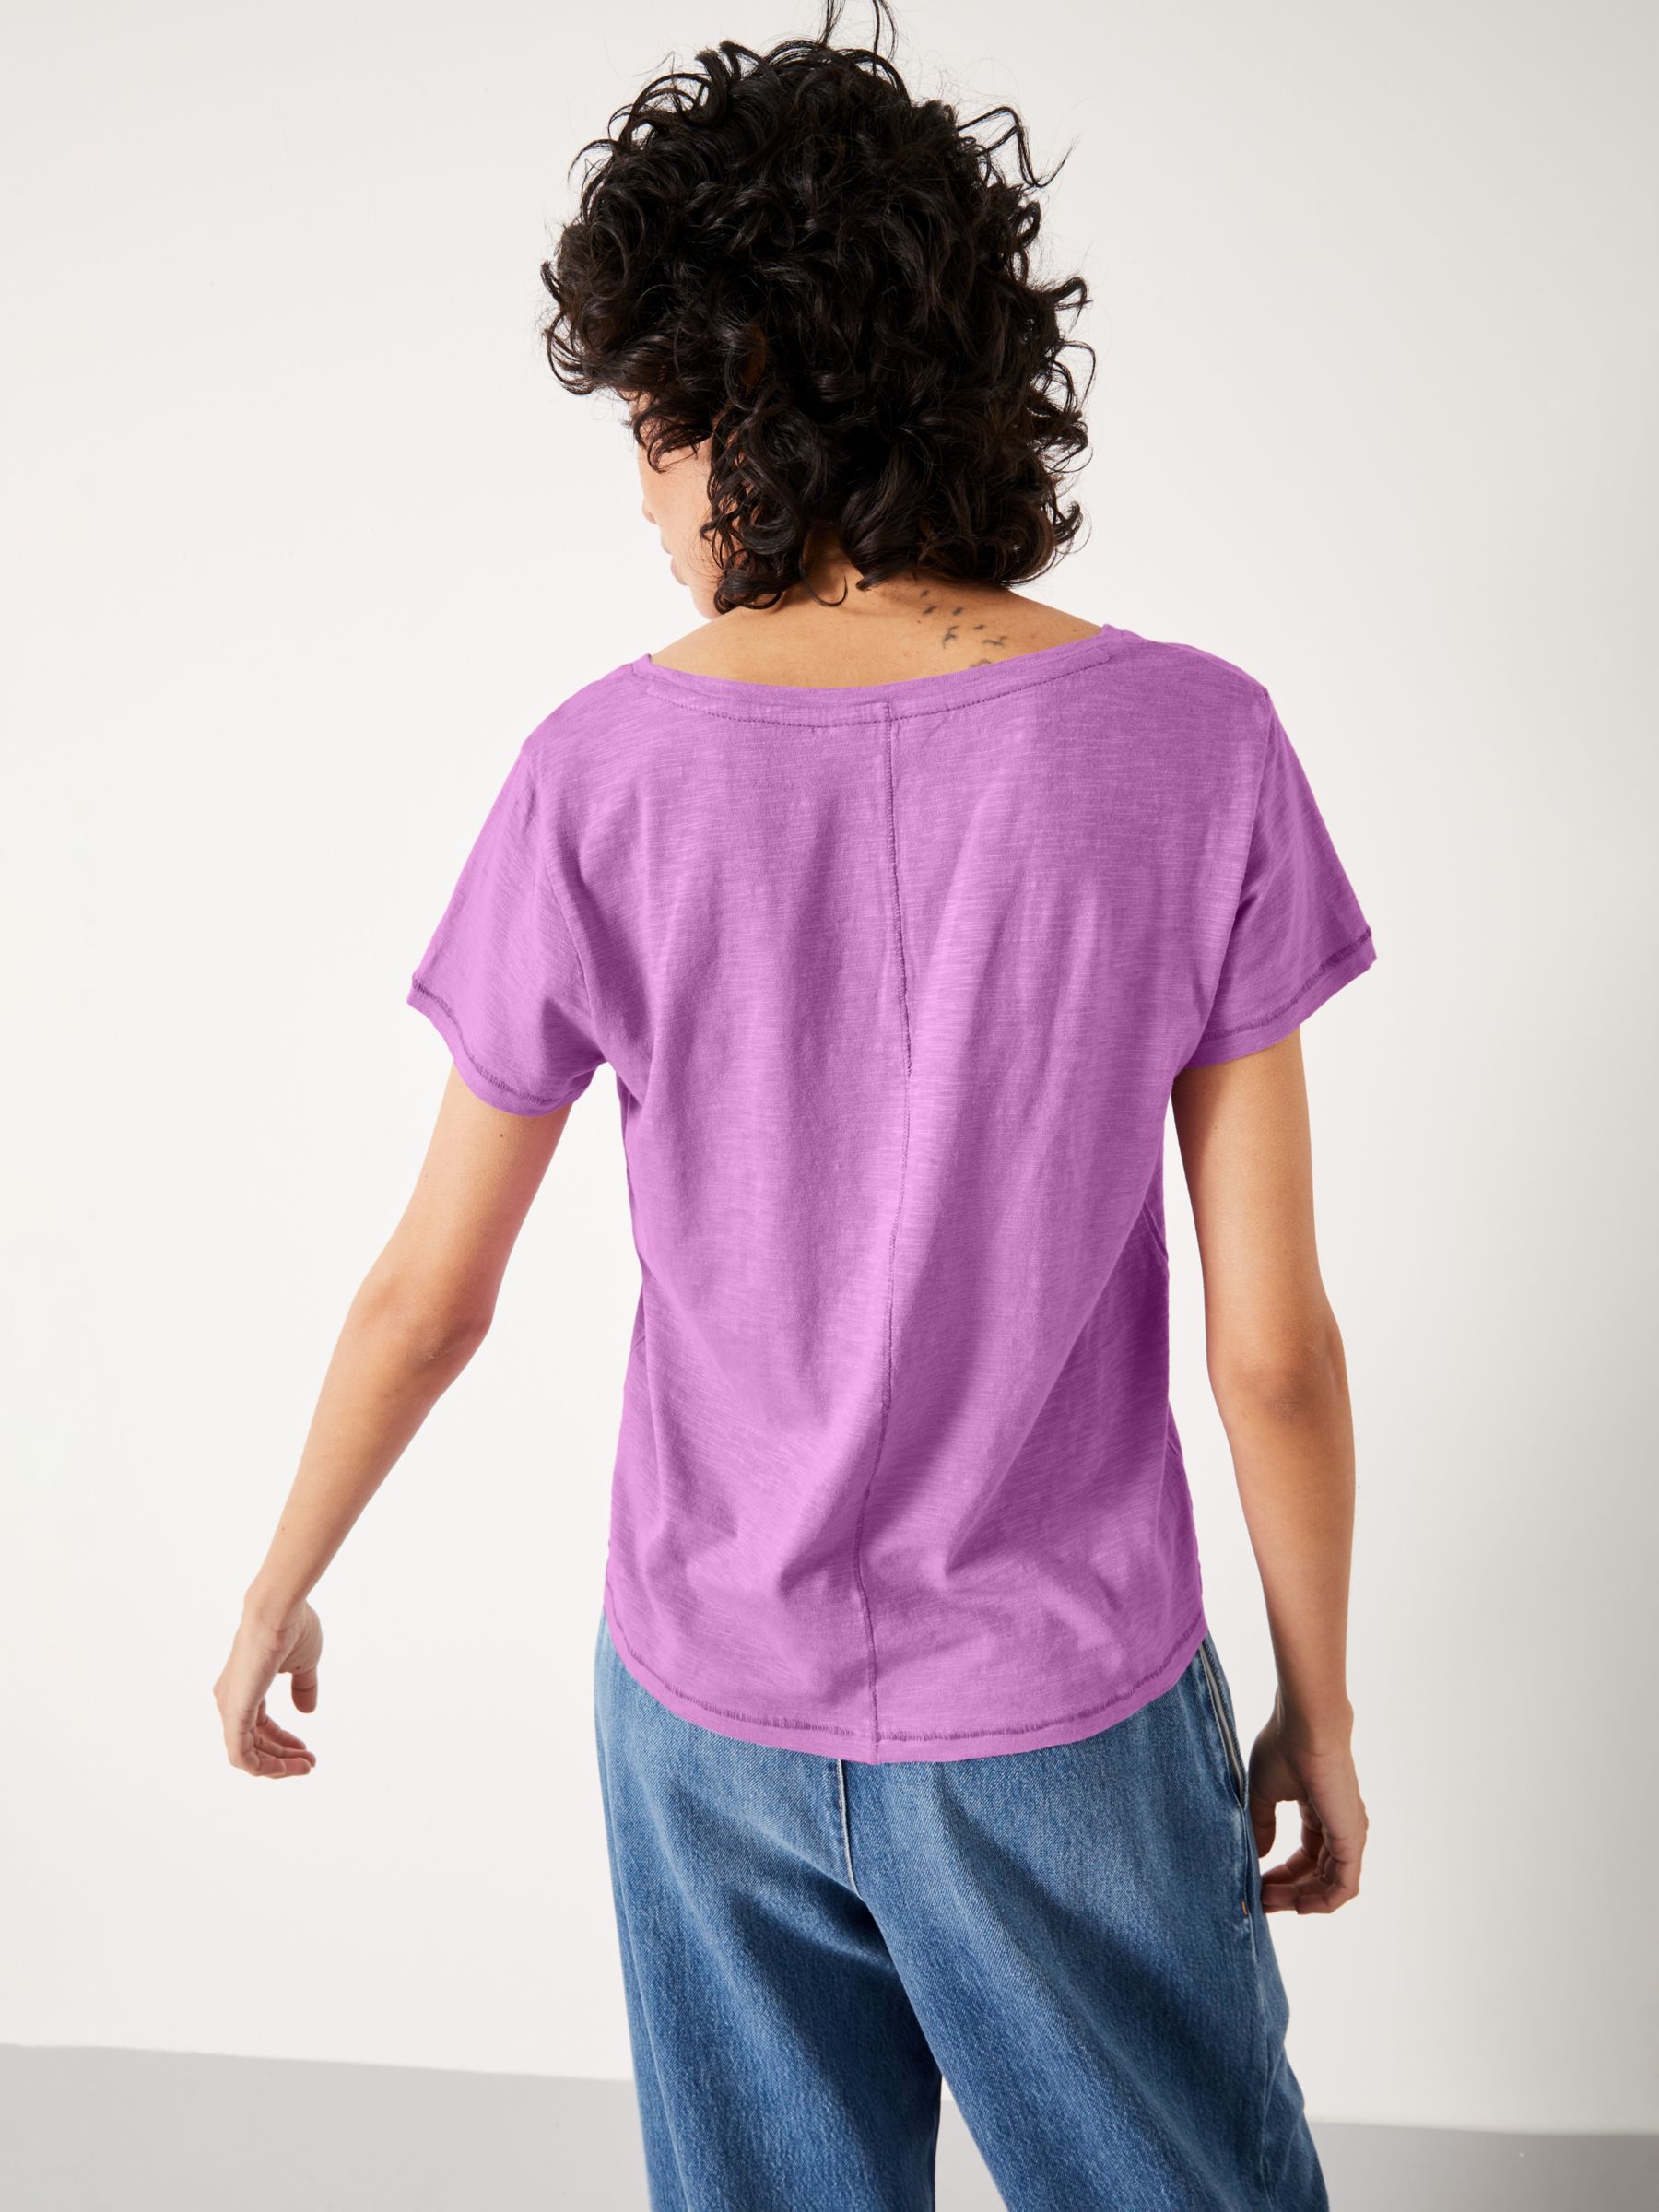 The Gusted Unisex Short Sleeve V-Neck T-Shirt